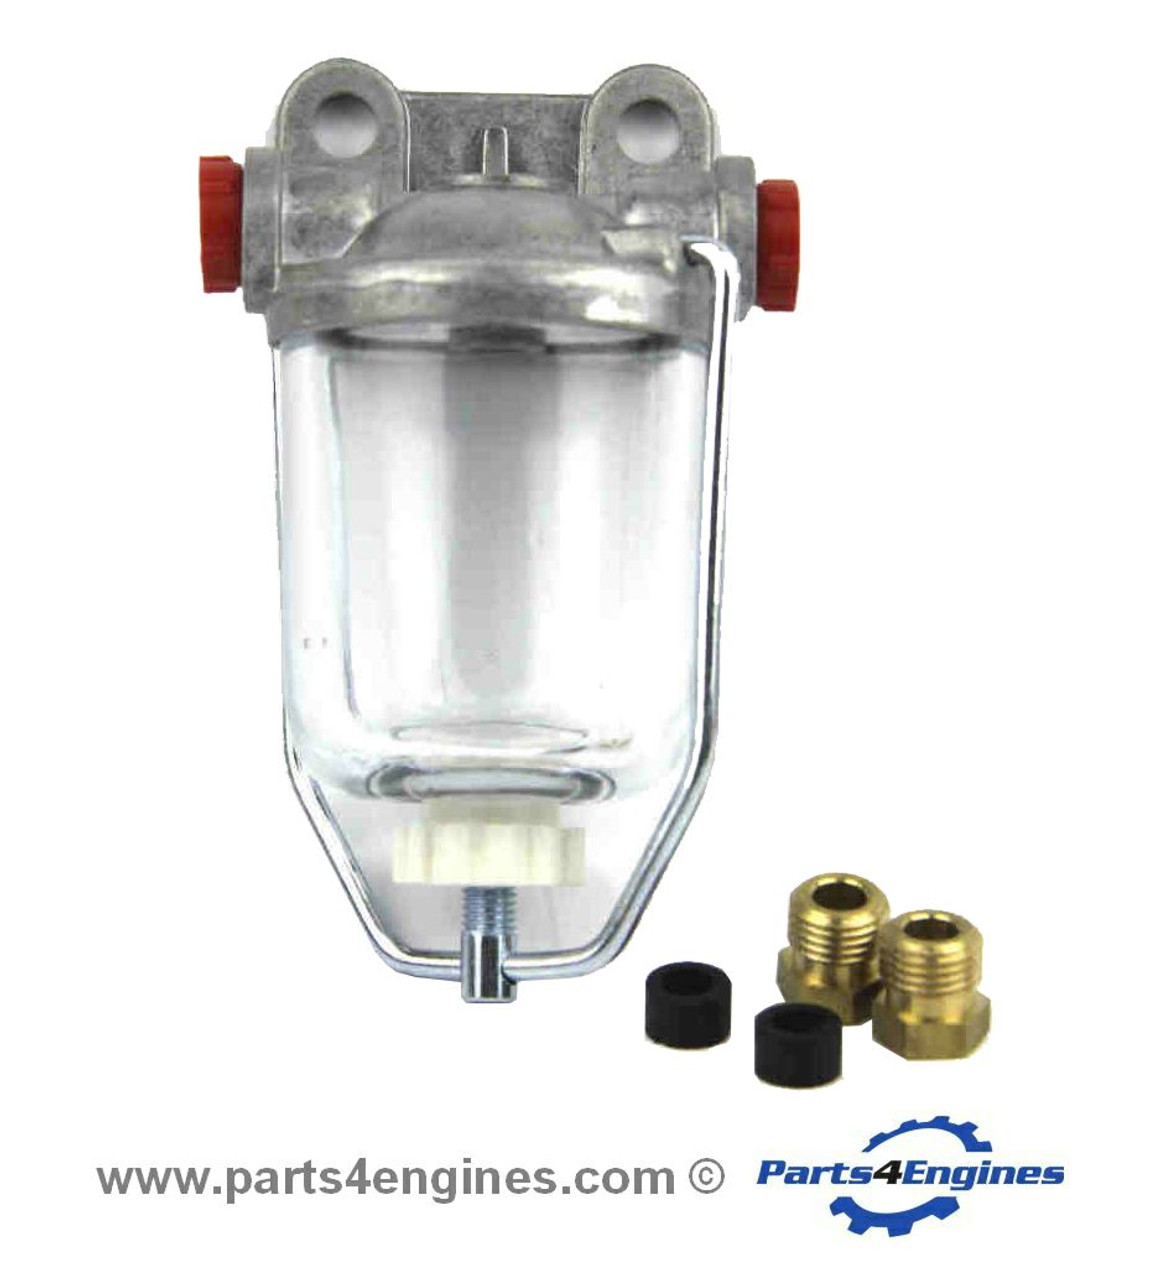 Perkins 4.99 Fuel pre-filter from parts4engines.com